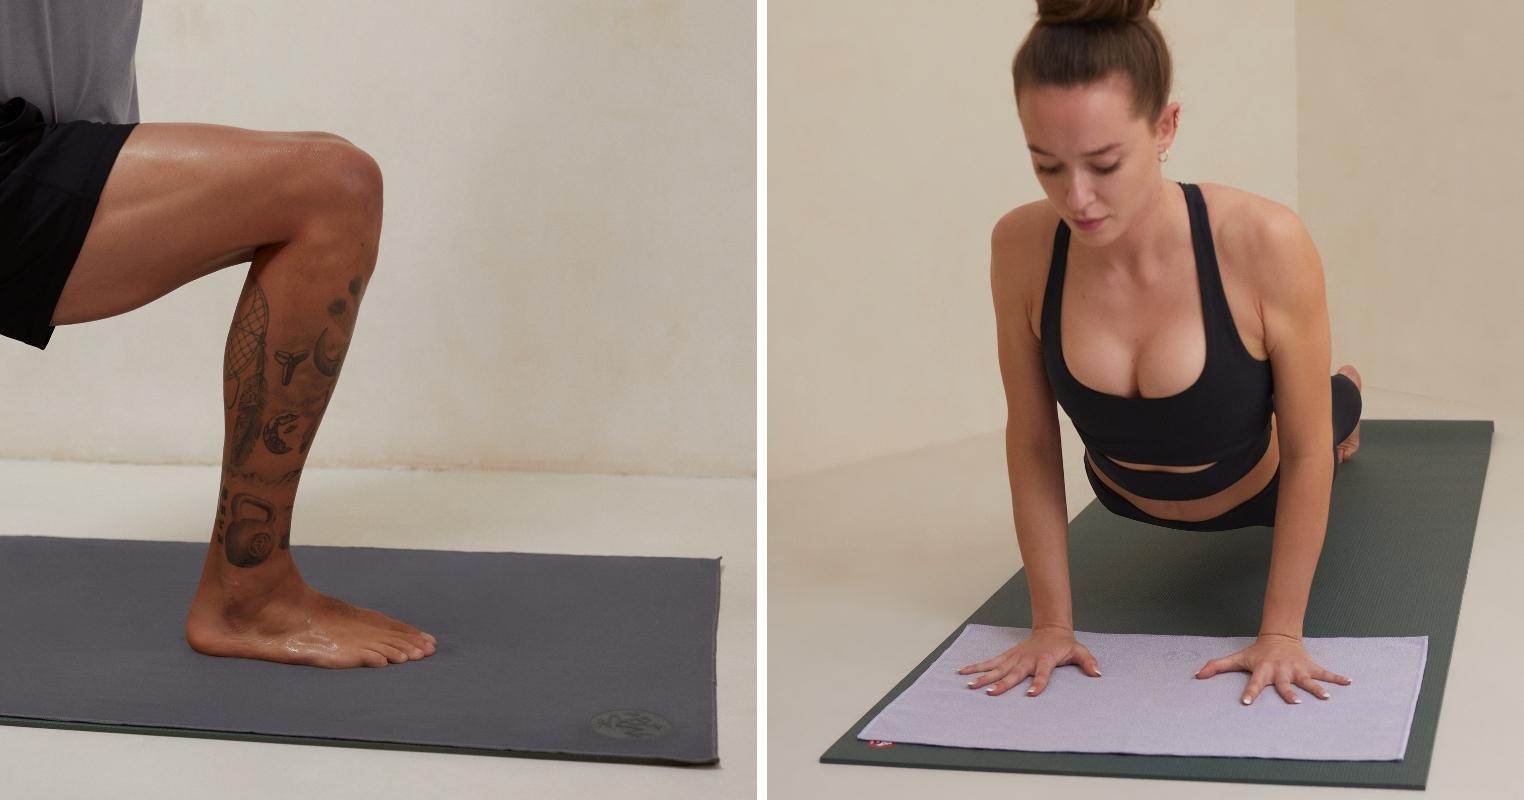 The Yoga Towel Guide - Do You Need A Yoga Towel? - Charmed Yoga